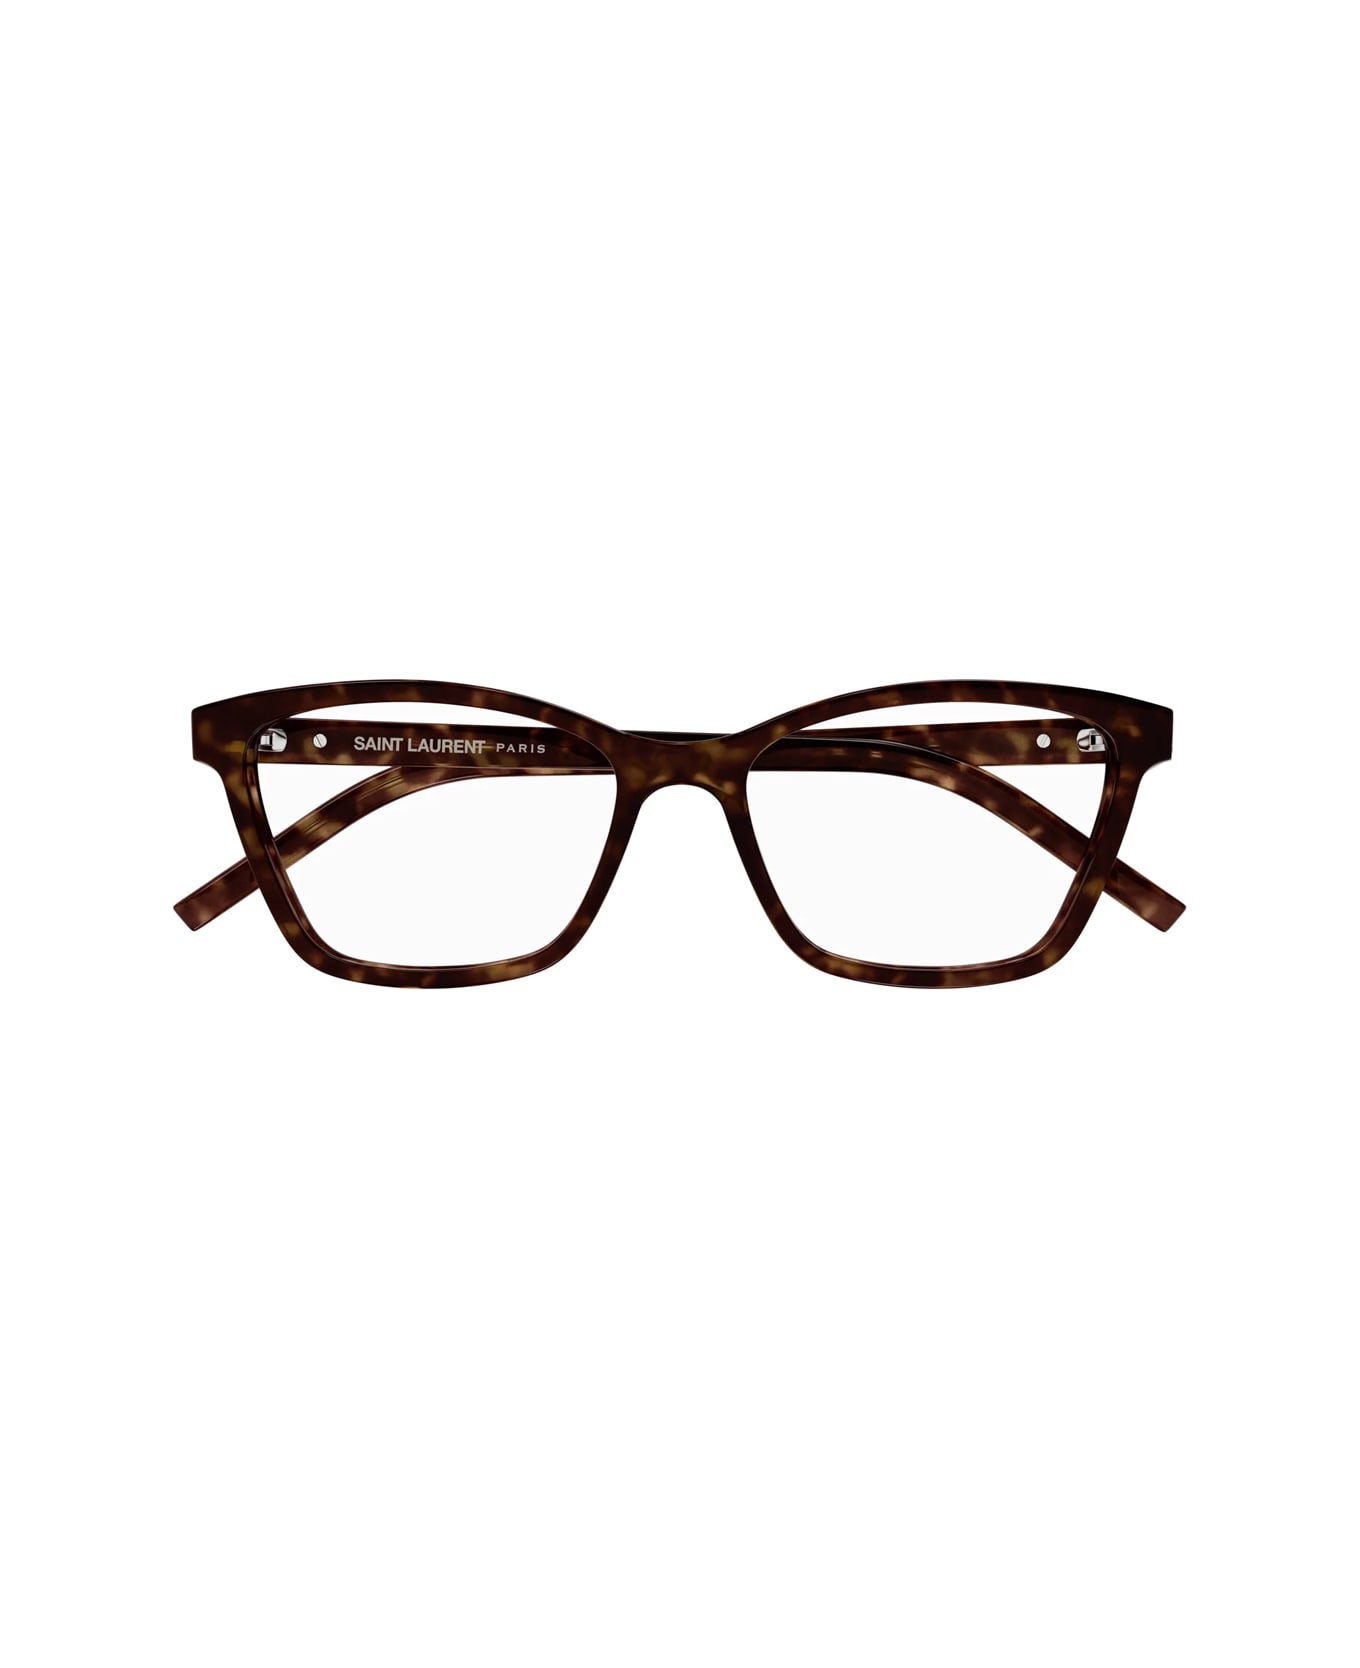 Saint Laurent Eyewear Sl M128 006 Glasses - Marrone アイウェア